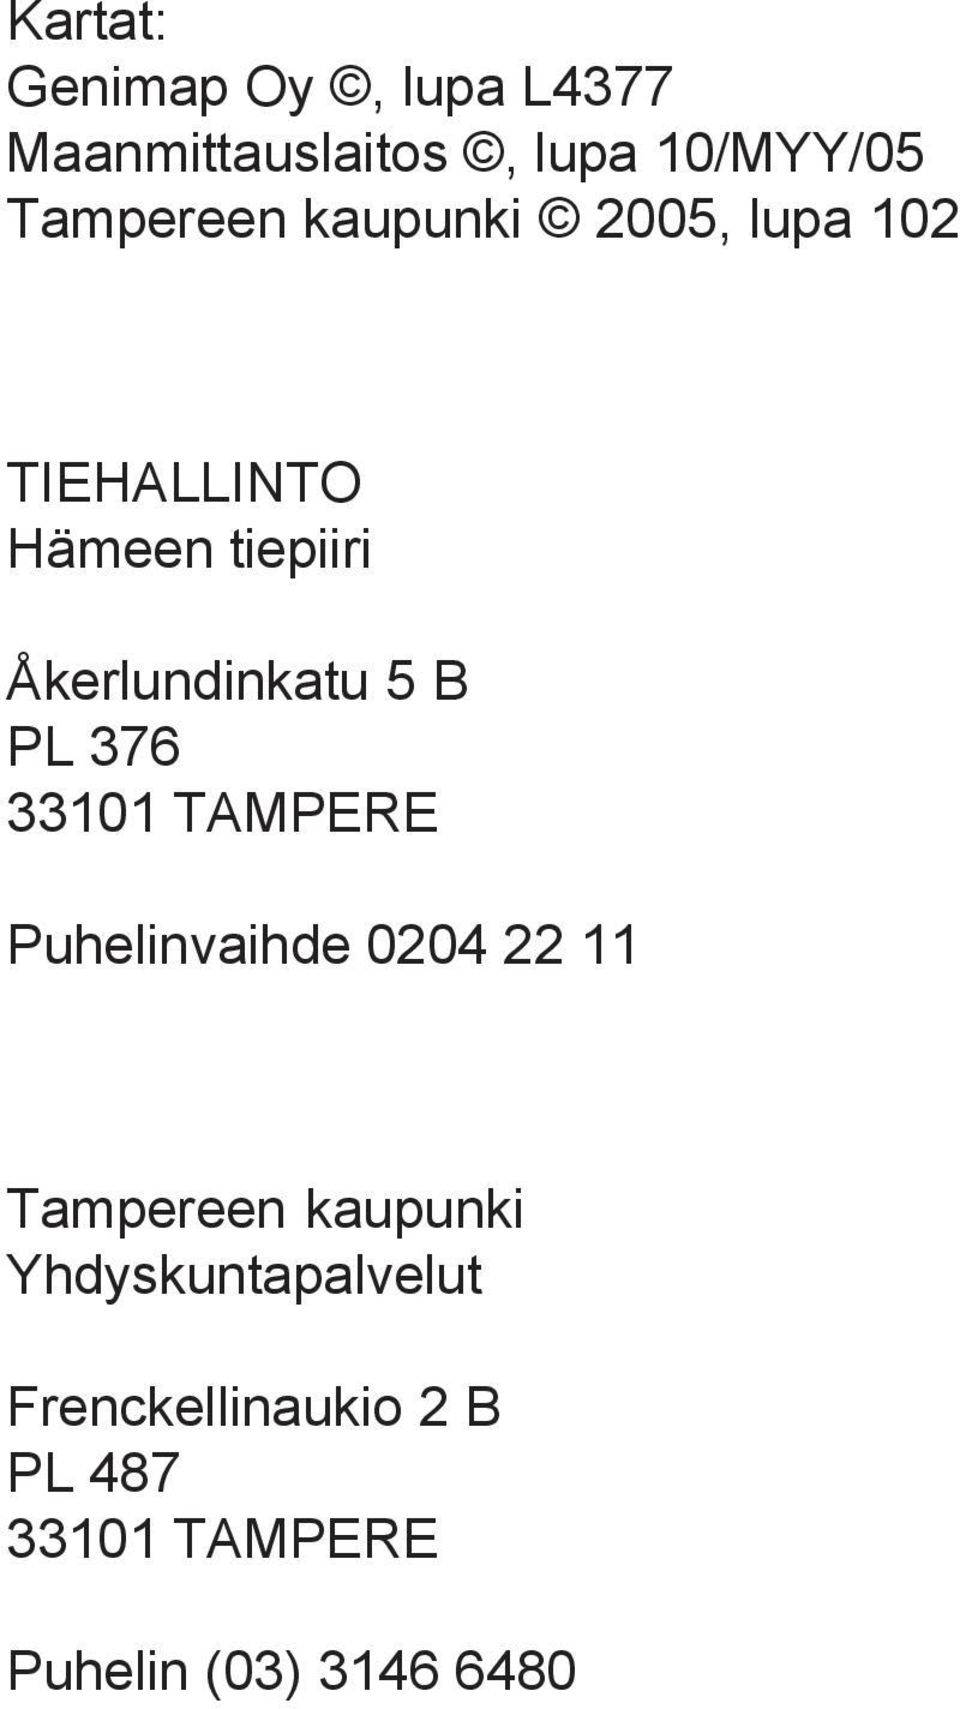 Åkerlundinkatu 5 B PL 376 33101 TAMPERE Puhelinvaihde 0204 22 11